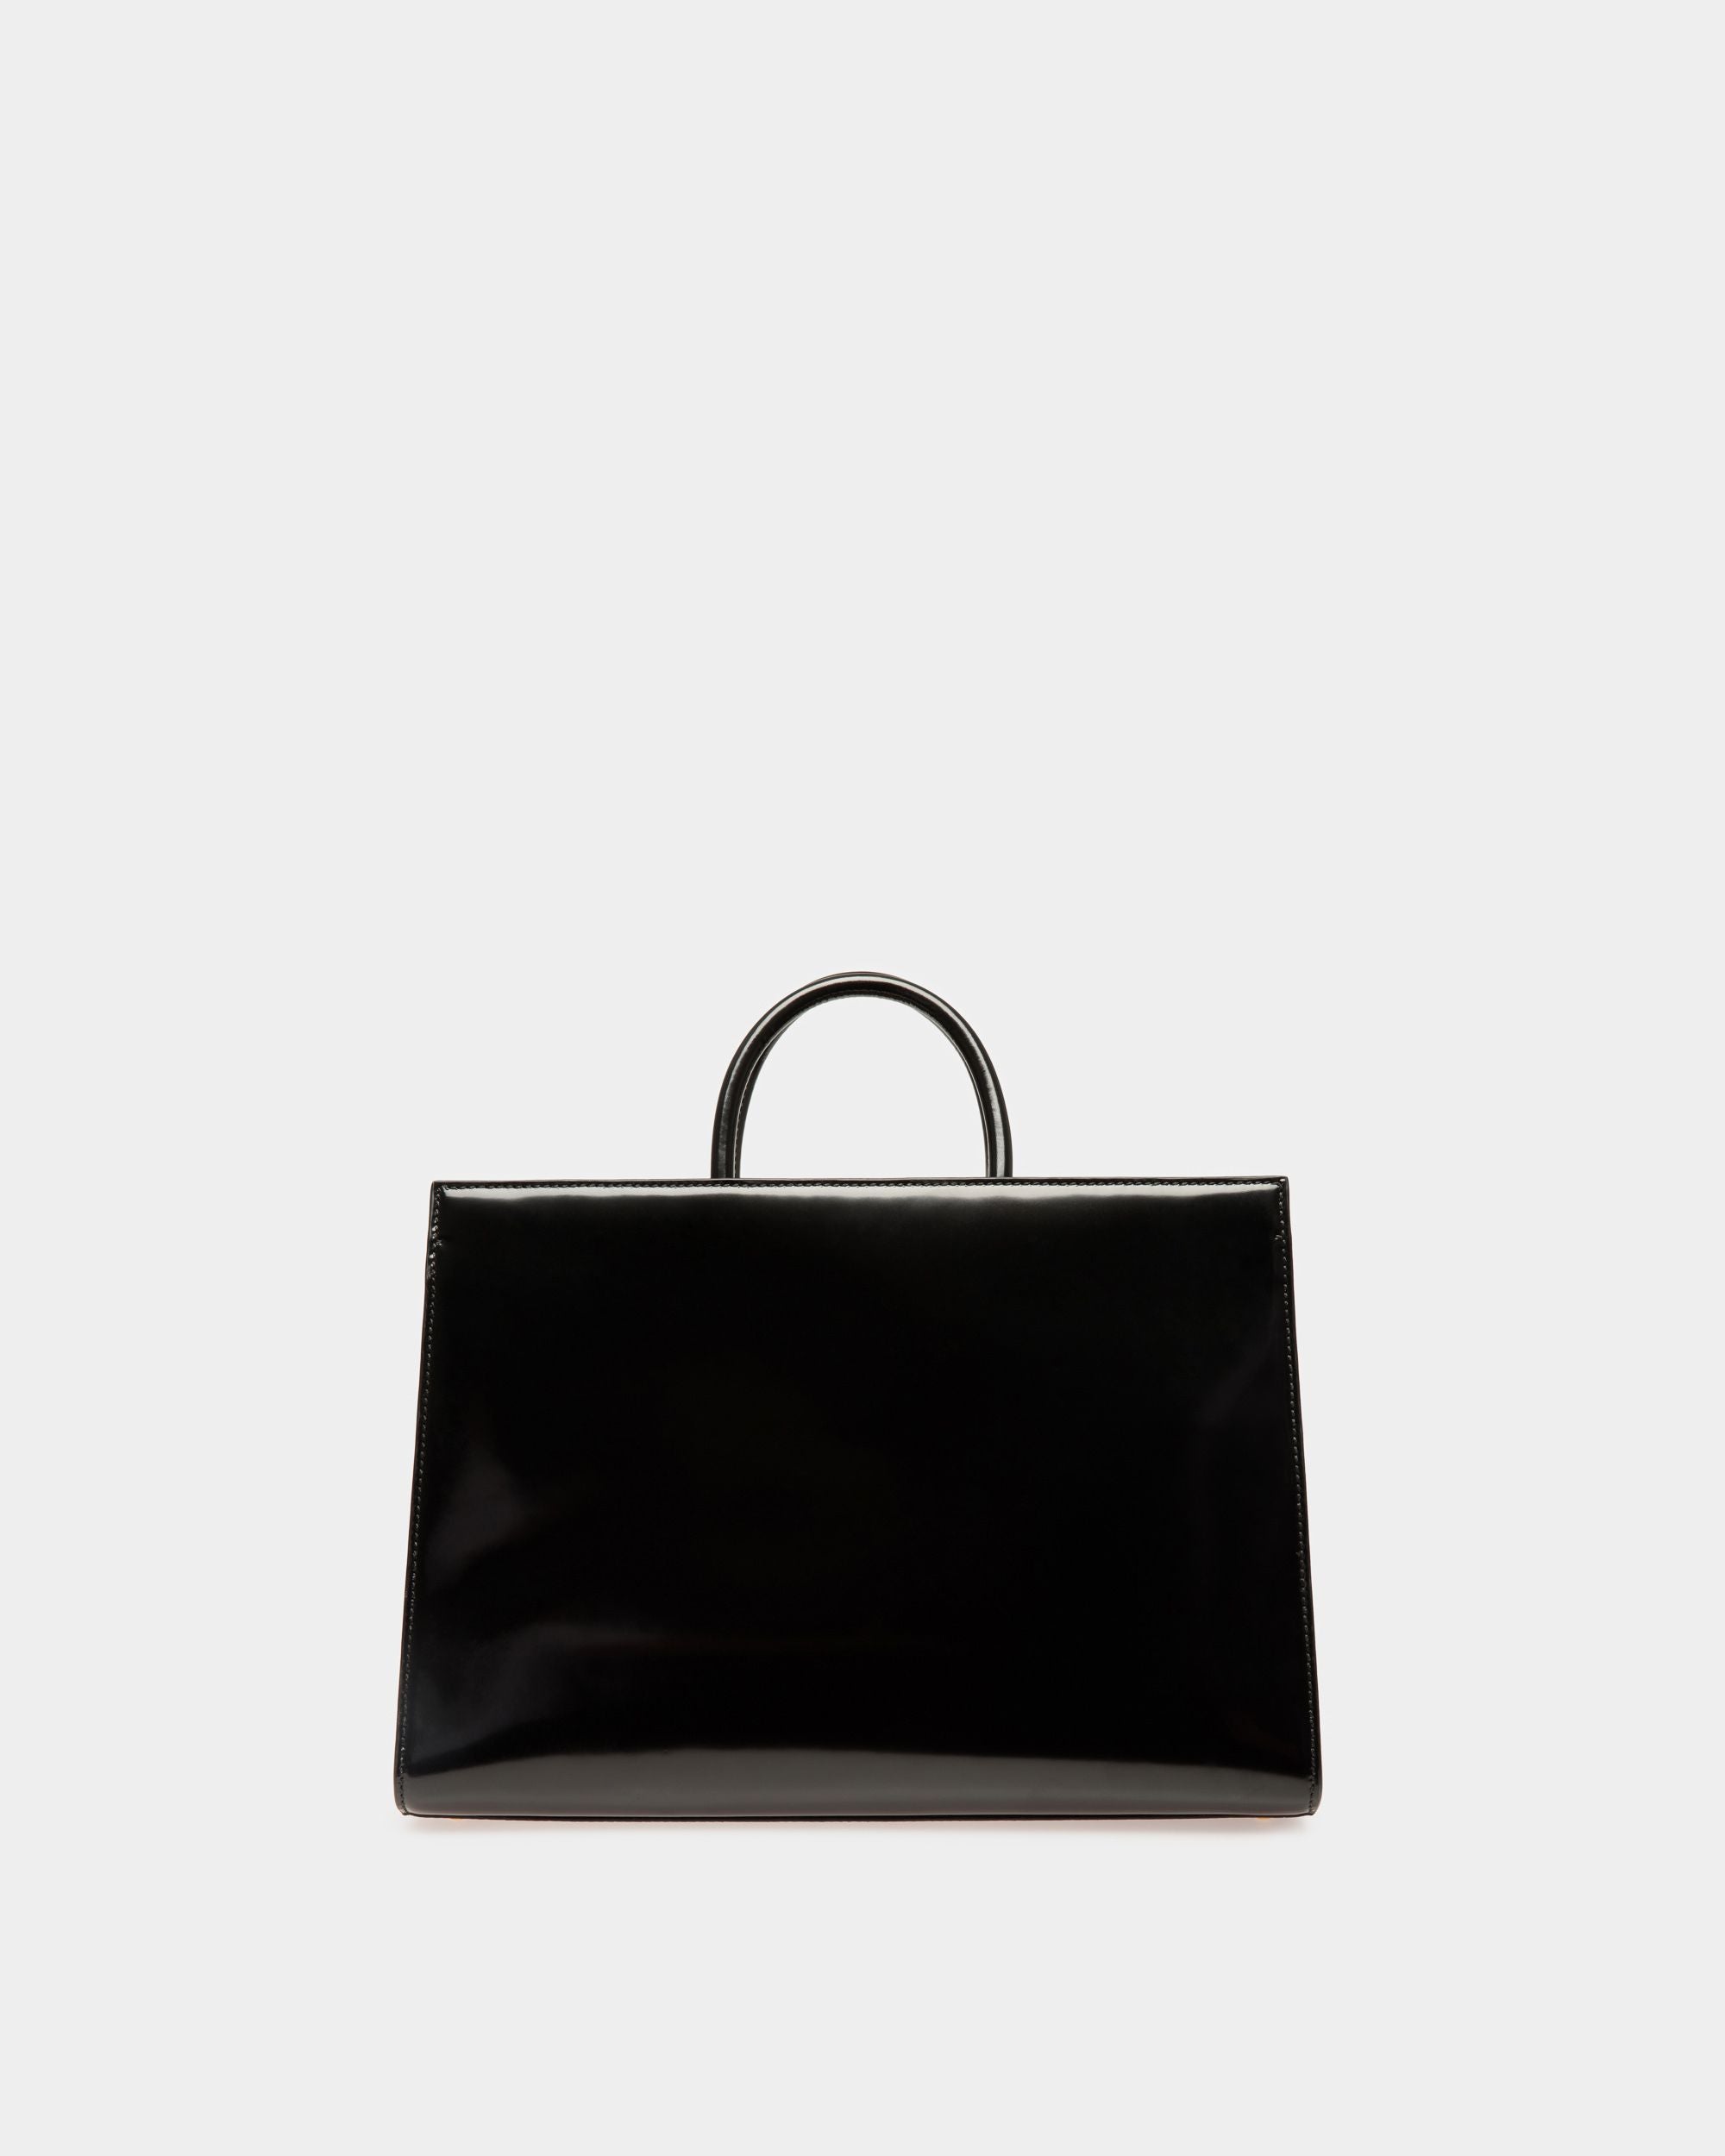 Emblem | Women's Tote Bag in Black Brushed Leather | Bally | Still Life Back